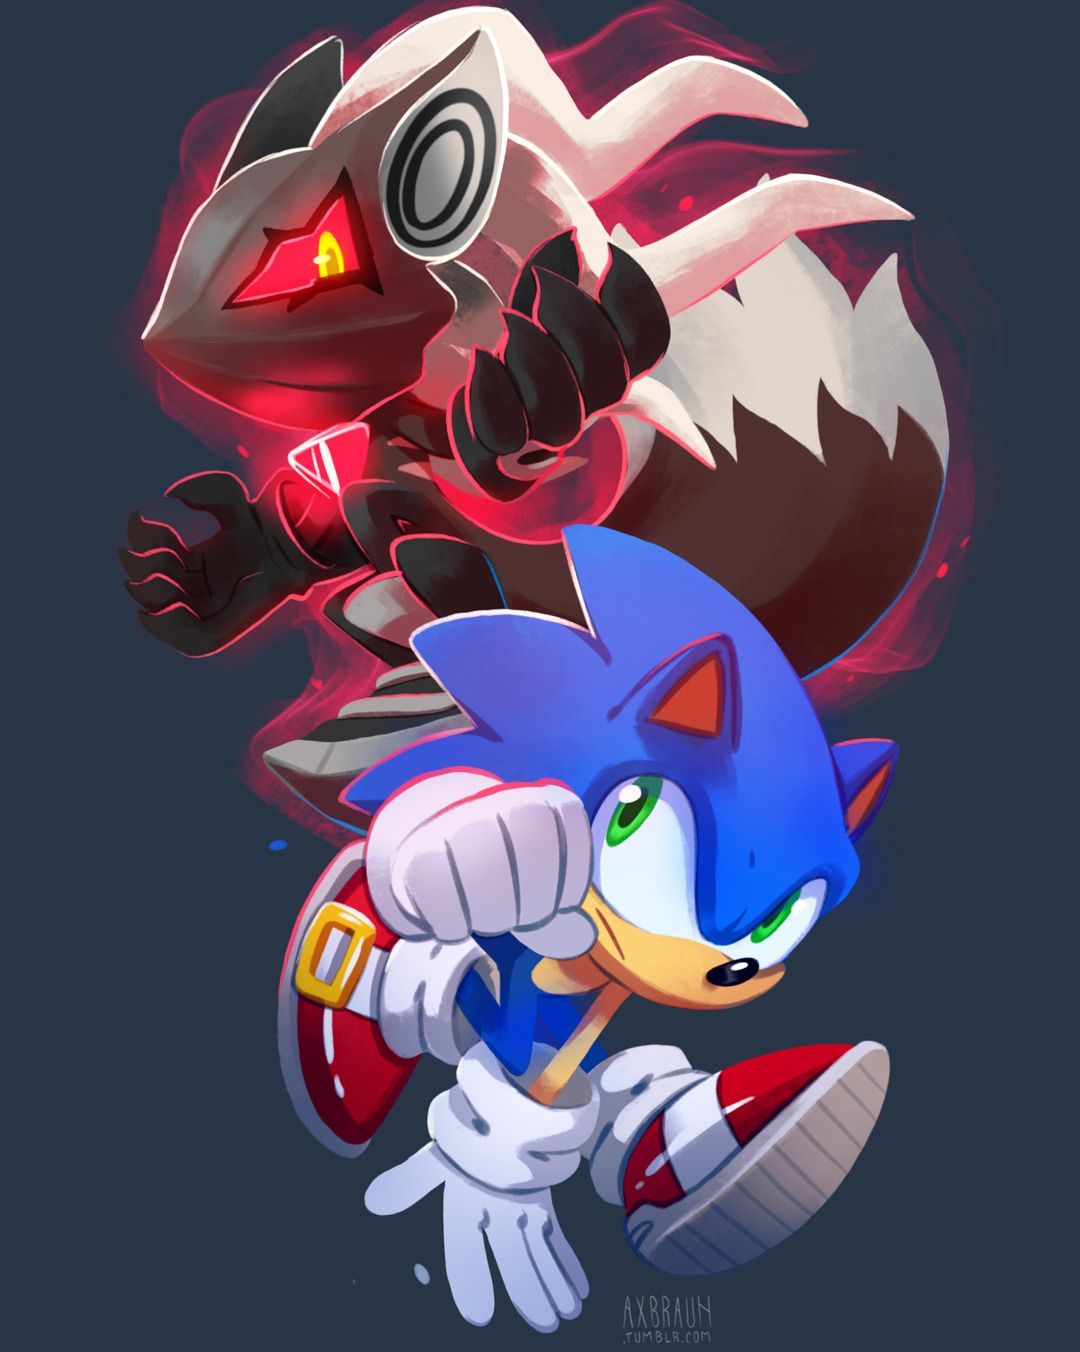 Sonic endless